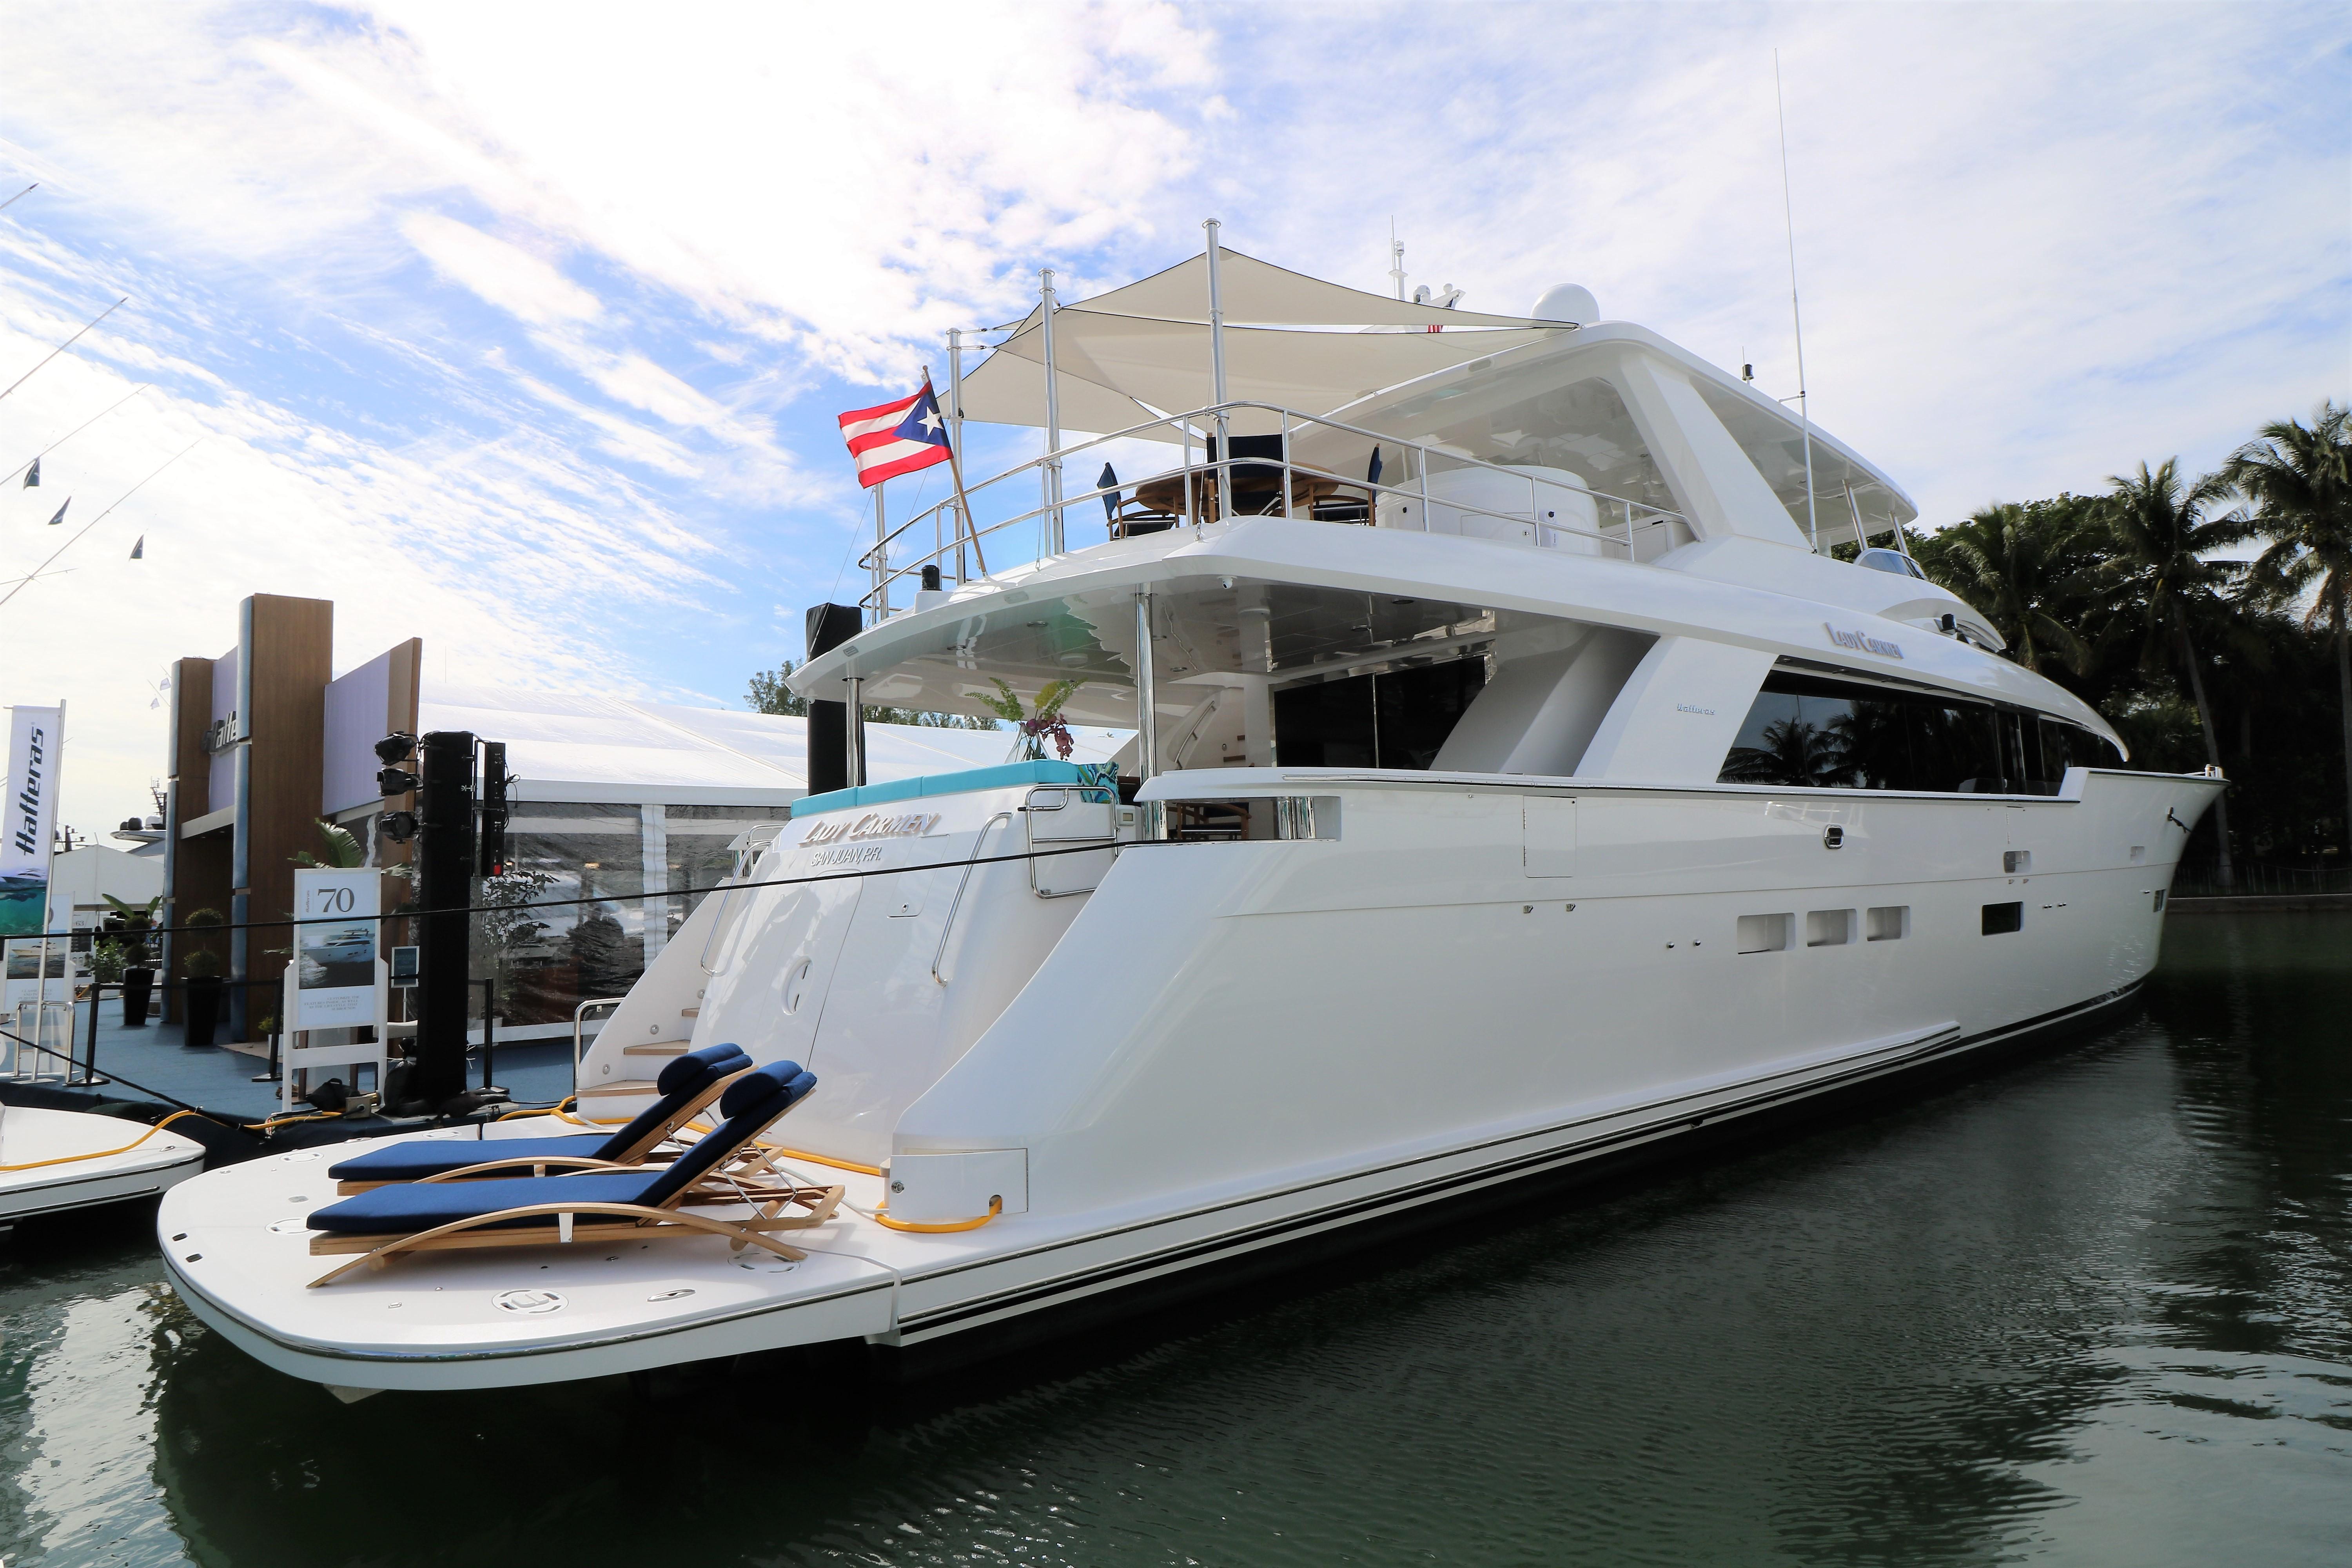 16 Hatteras 100 Raised Pilothouse Yacht For Sale Lady Carmen Si Yachts